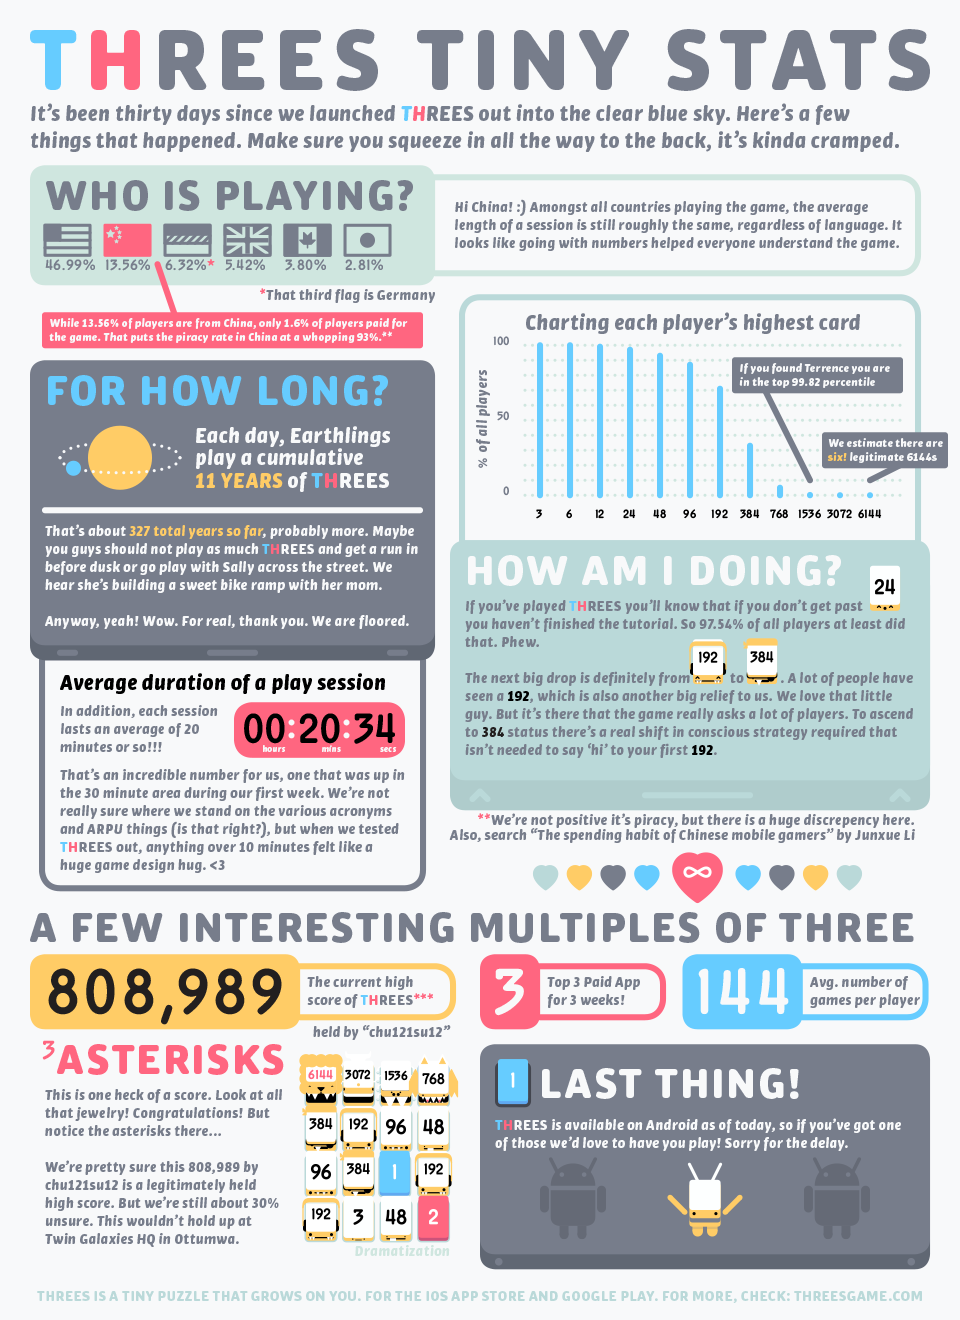 Threes-infographic_960